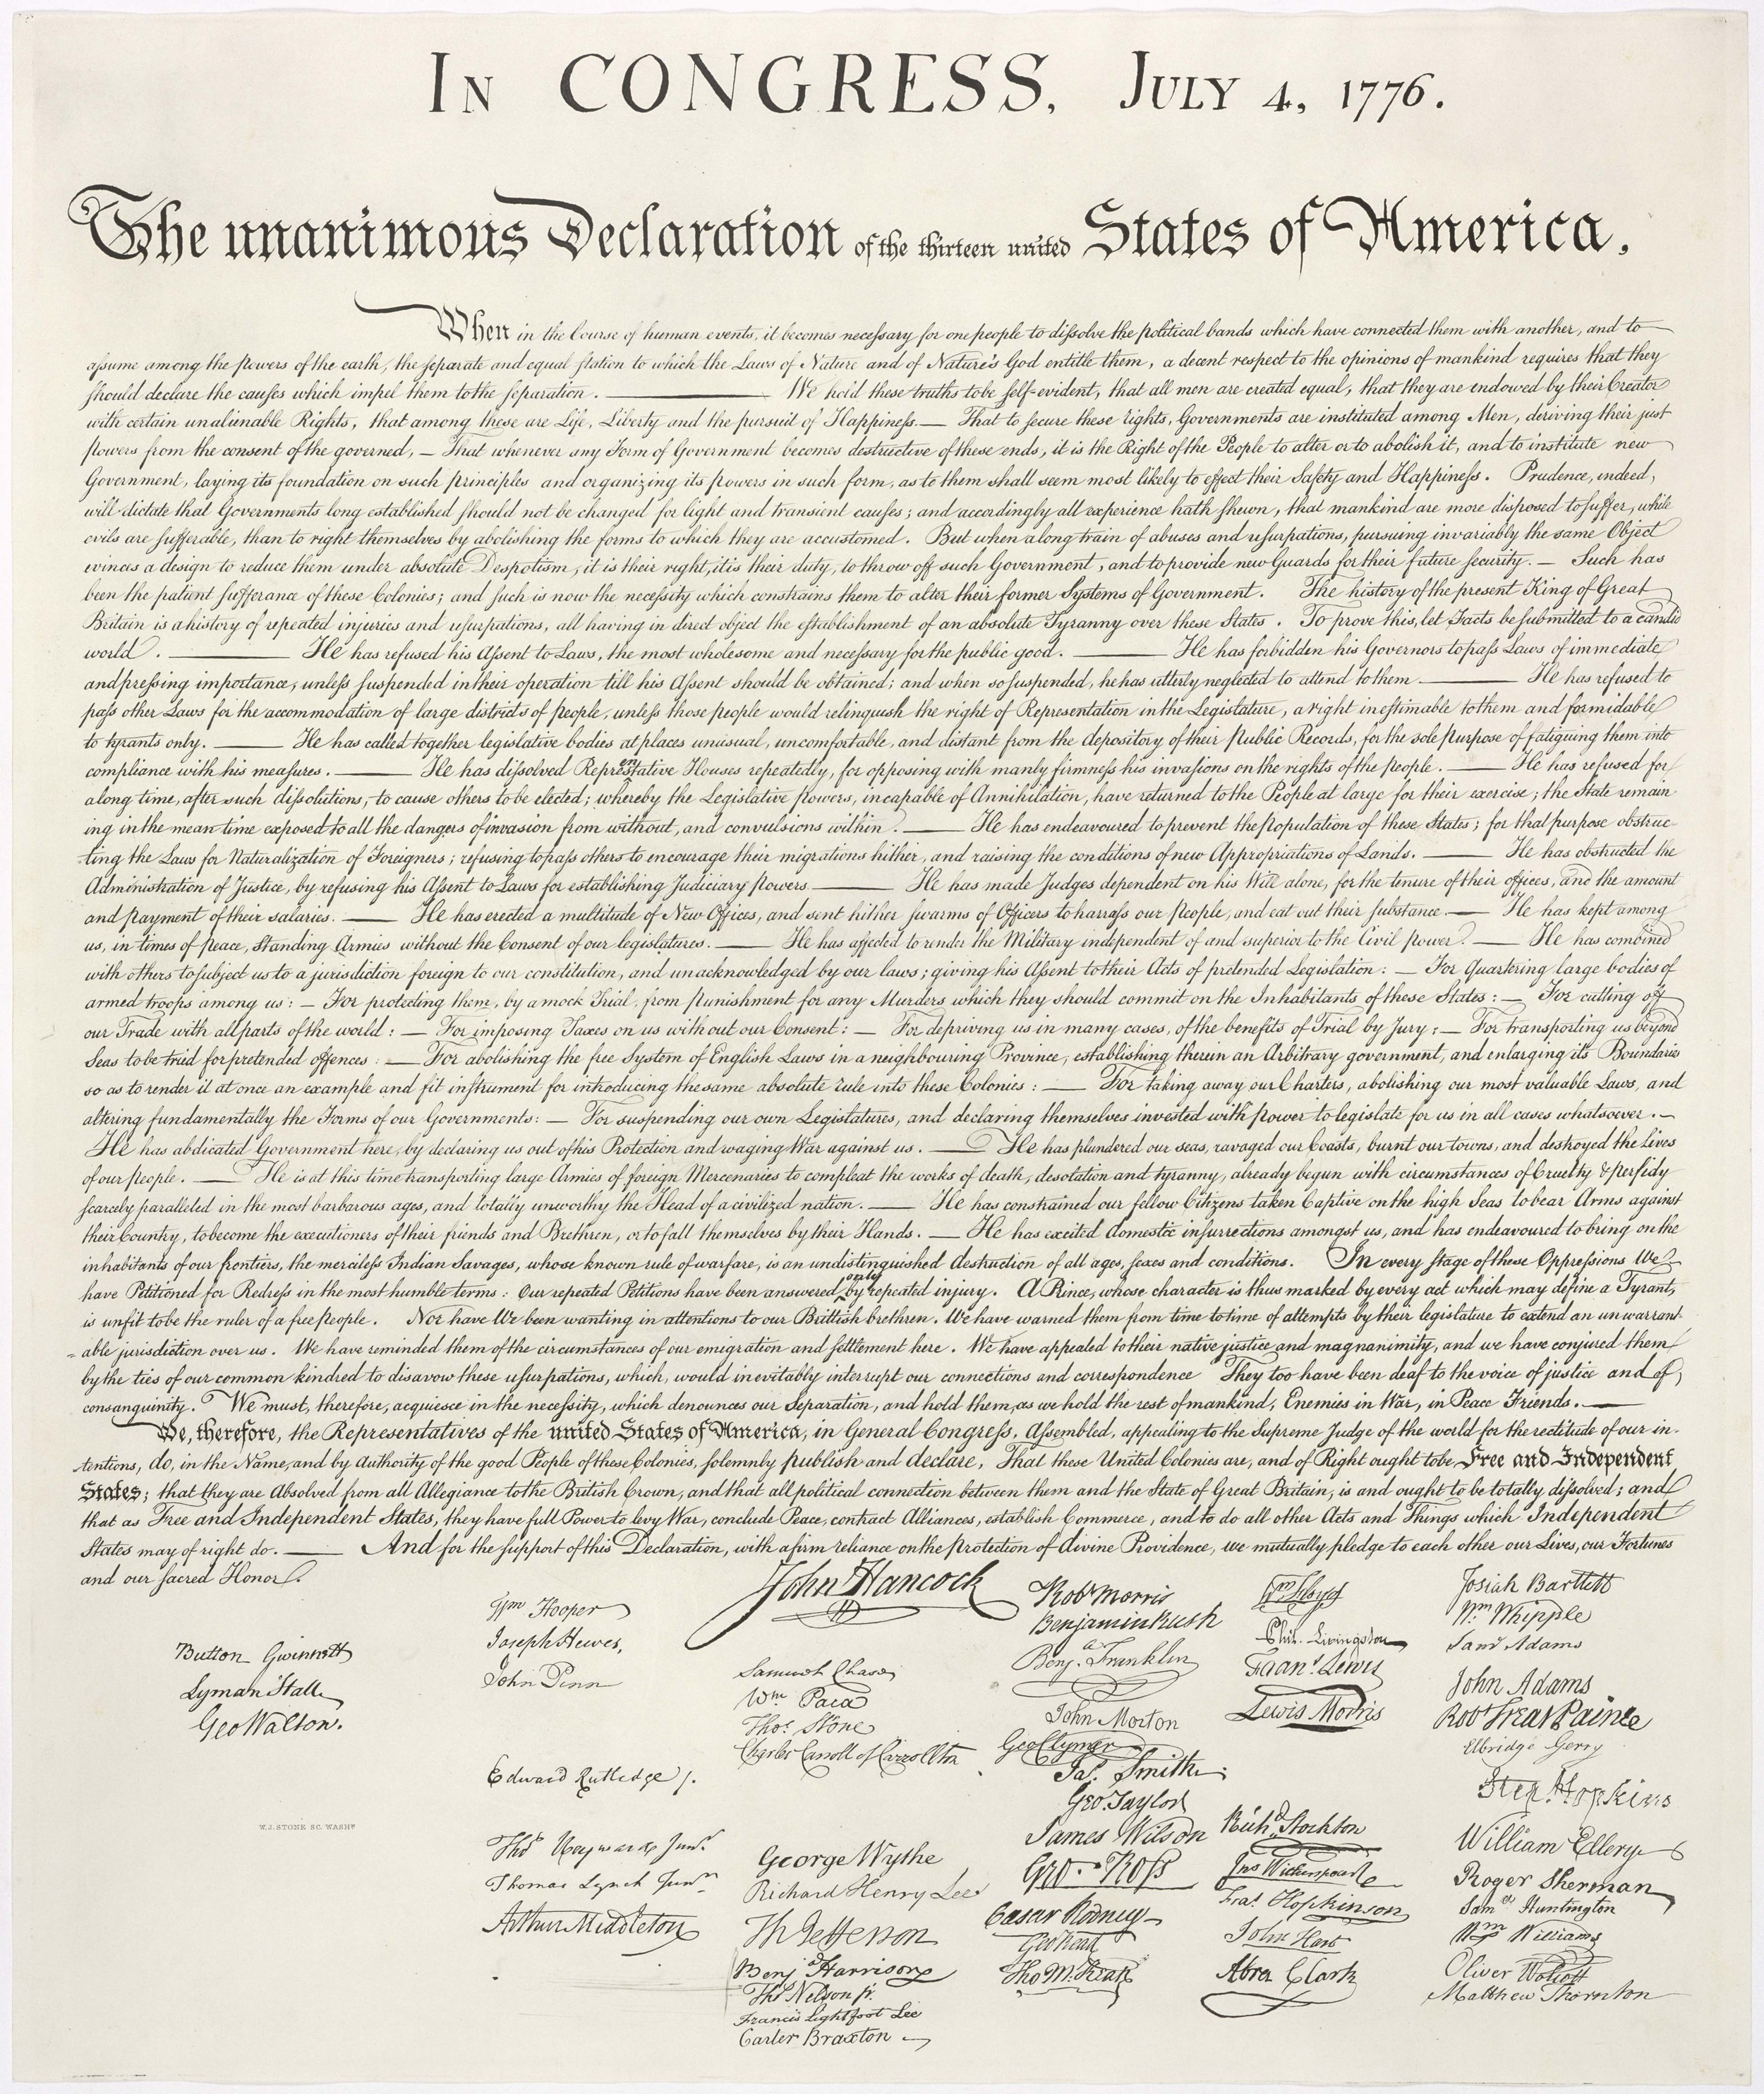 Democracy: Declaration of Independence (All men...)